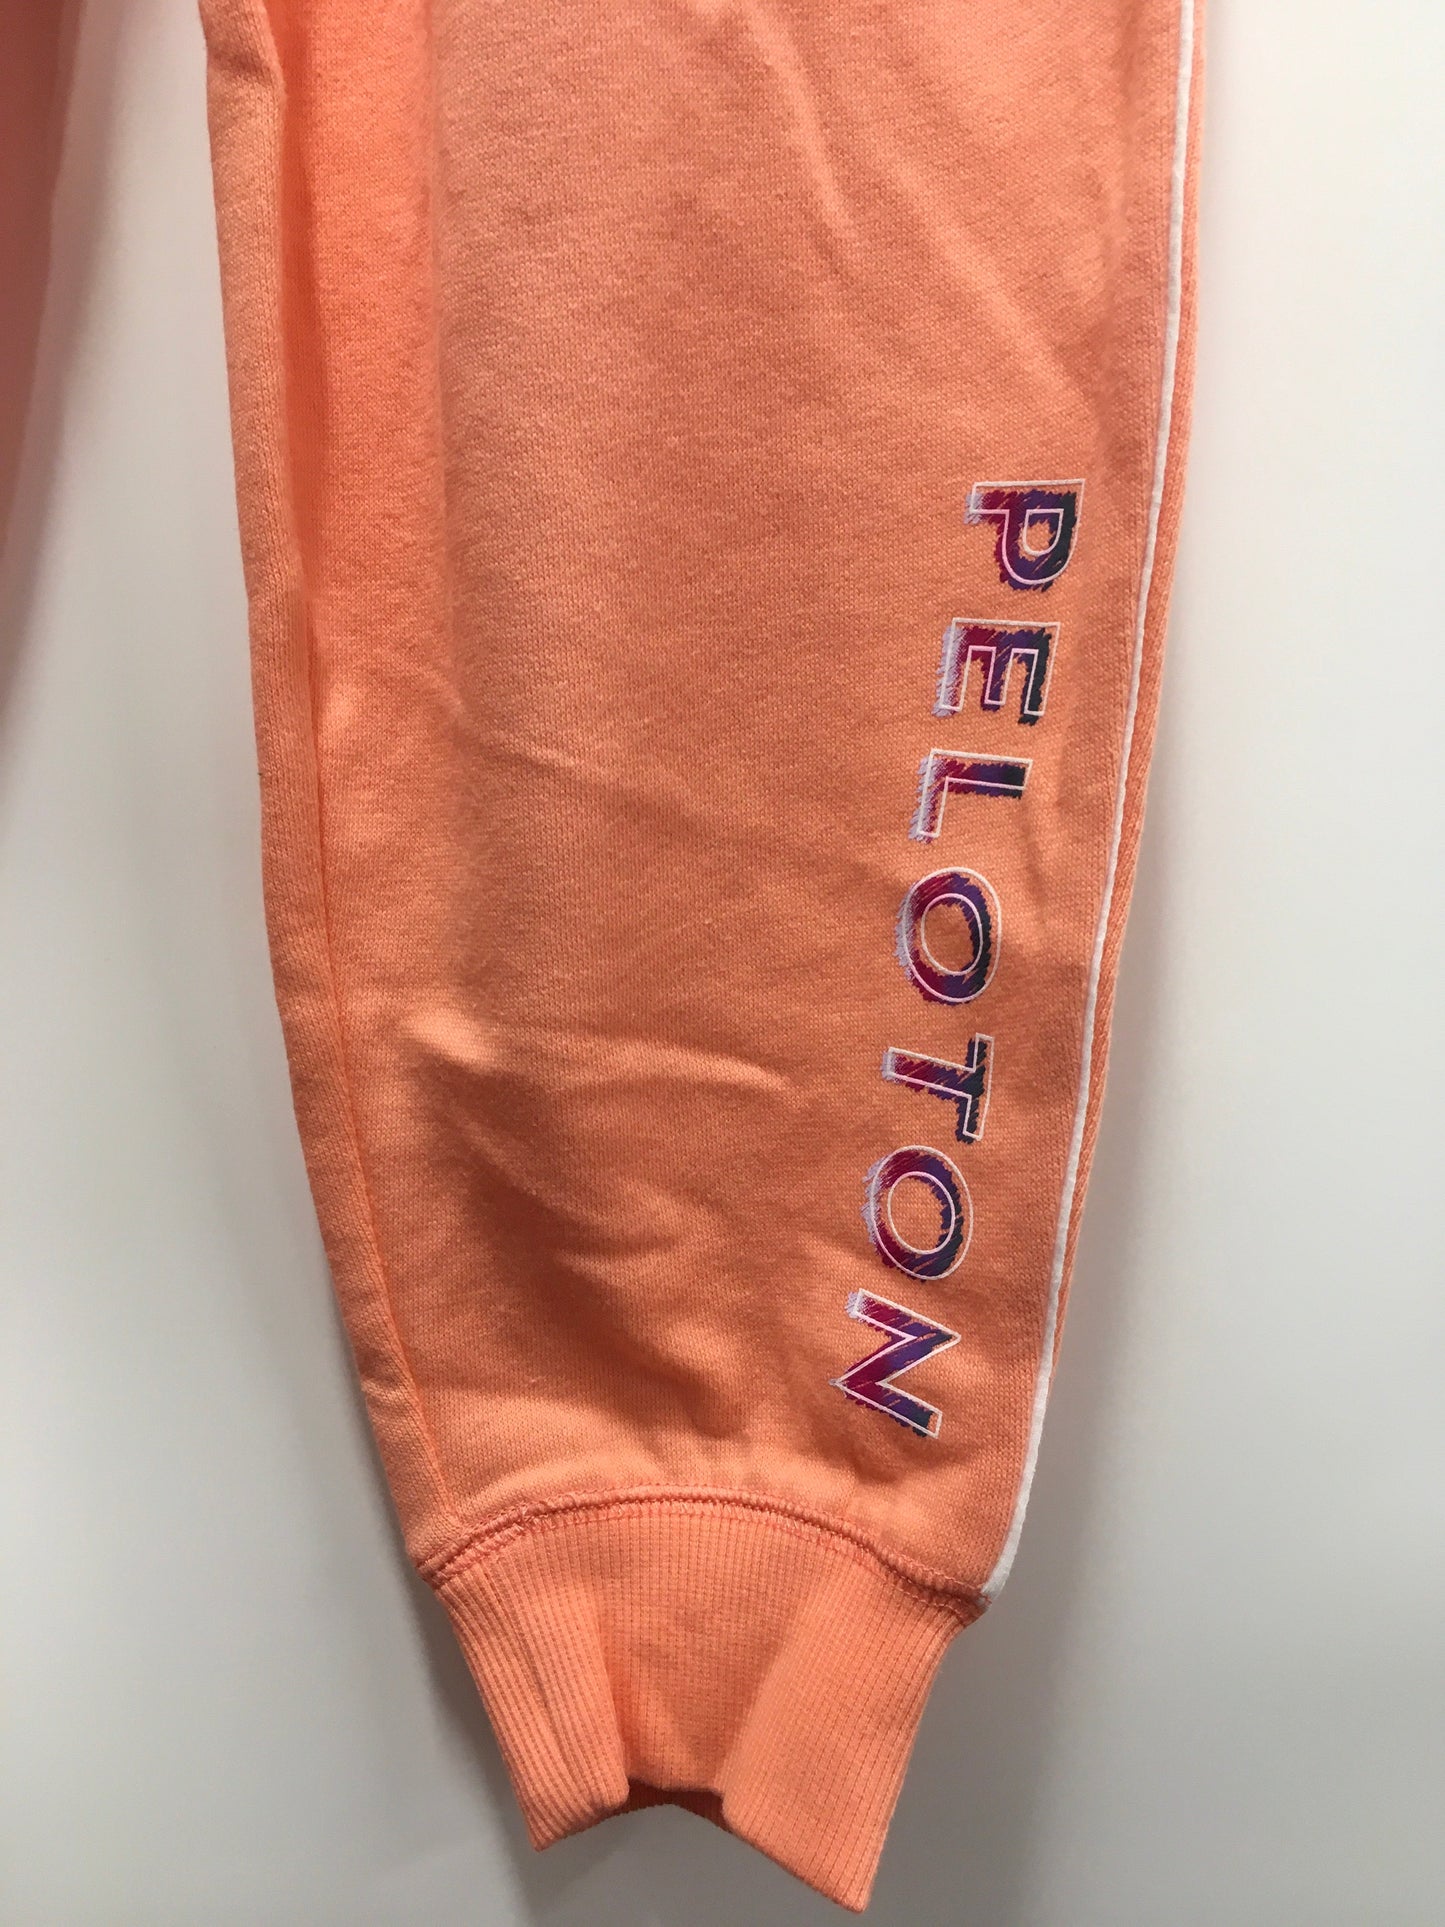 Athletic Pants By Peloton Size: M